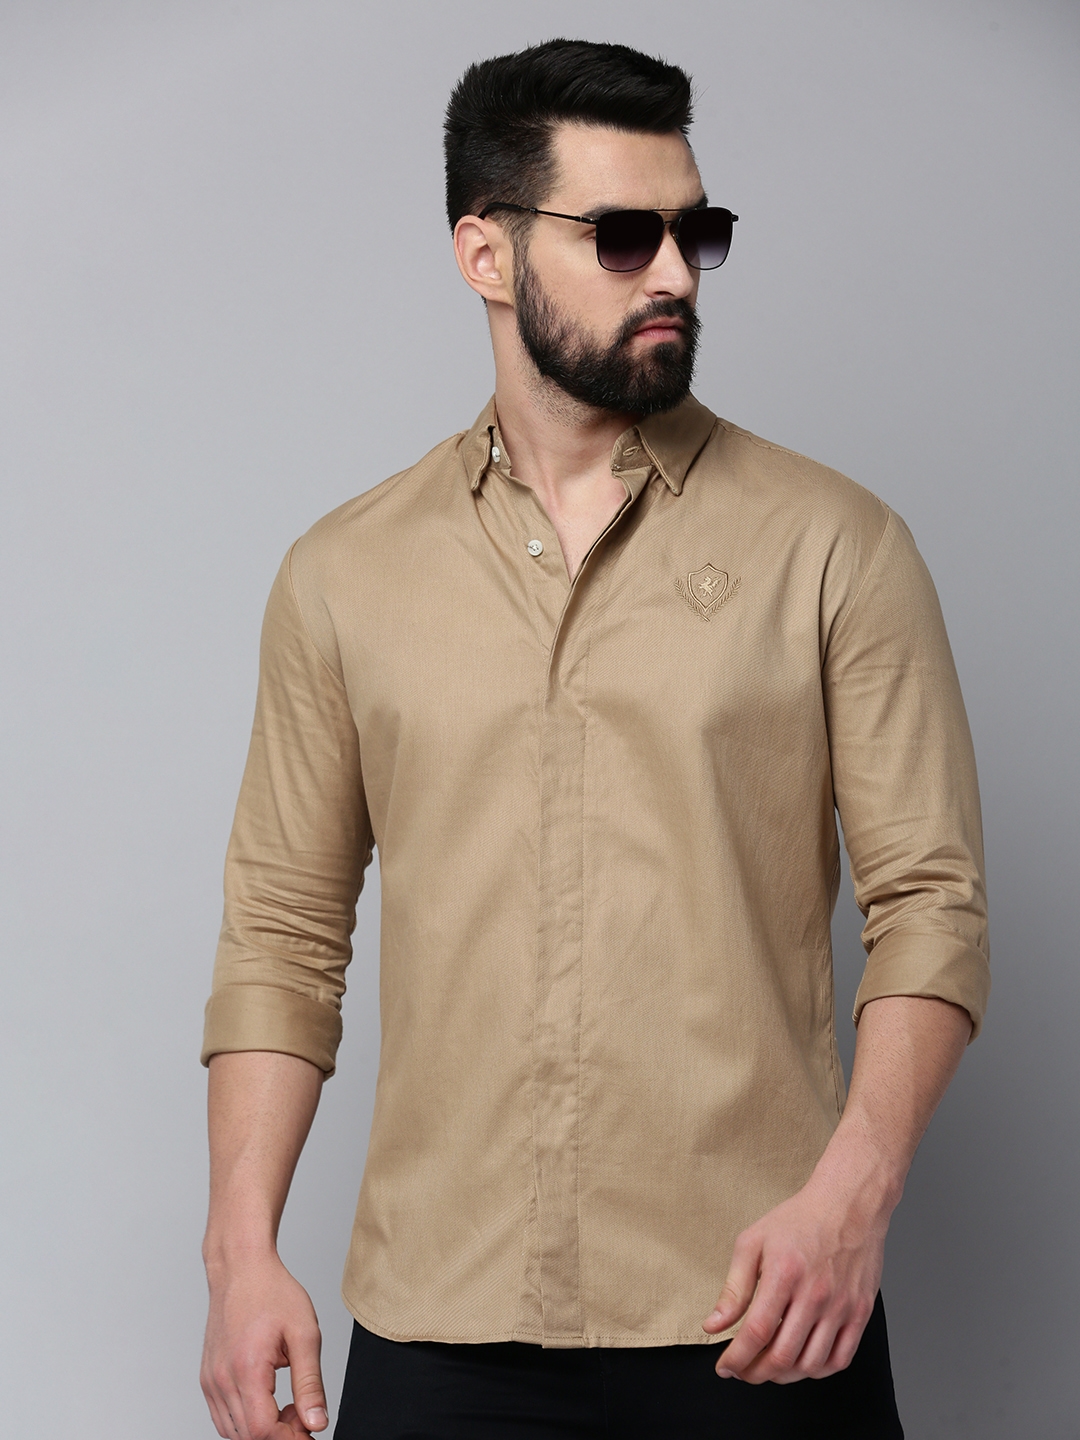 SHOWOFF Men's Spread Collar Long Sleeves Solid Khaki Shirt